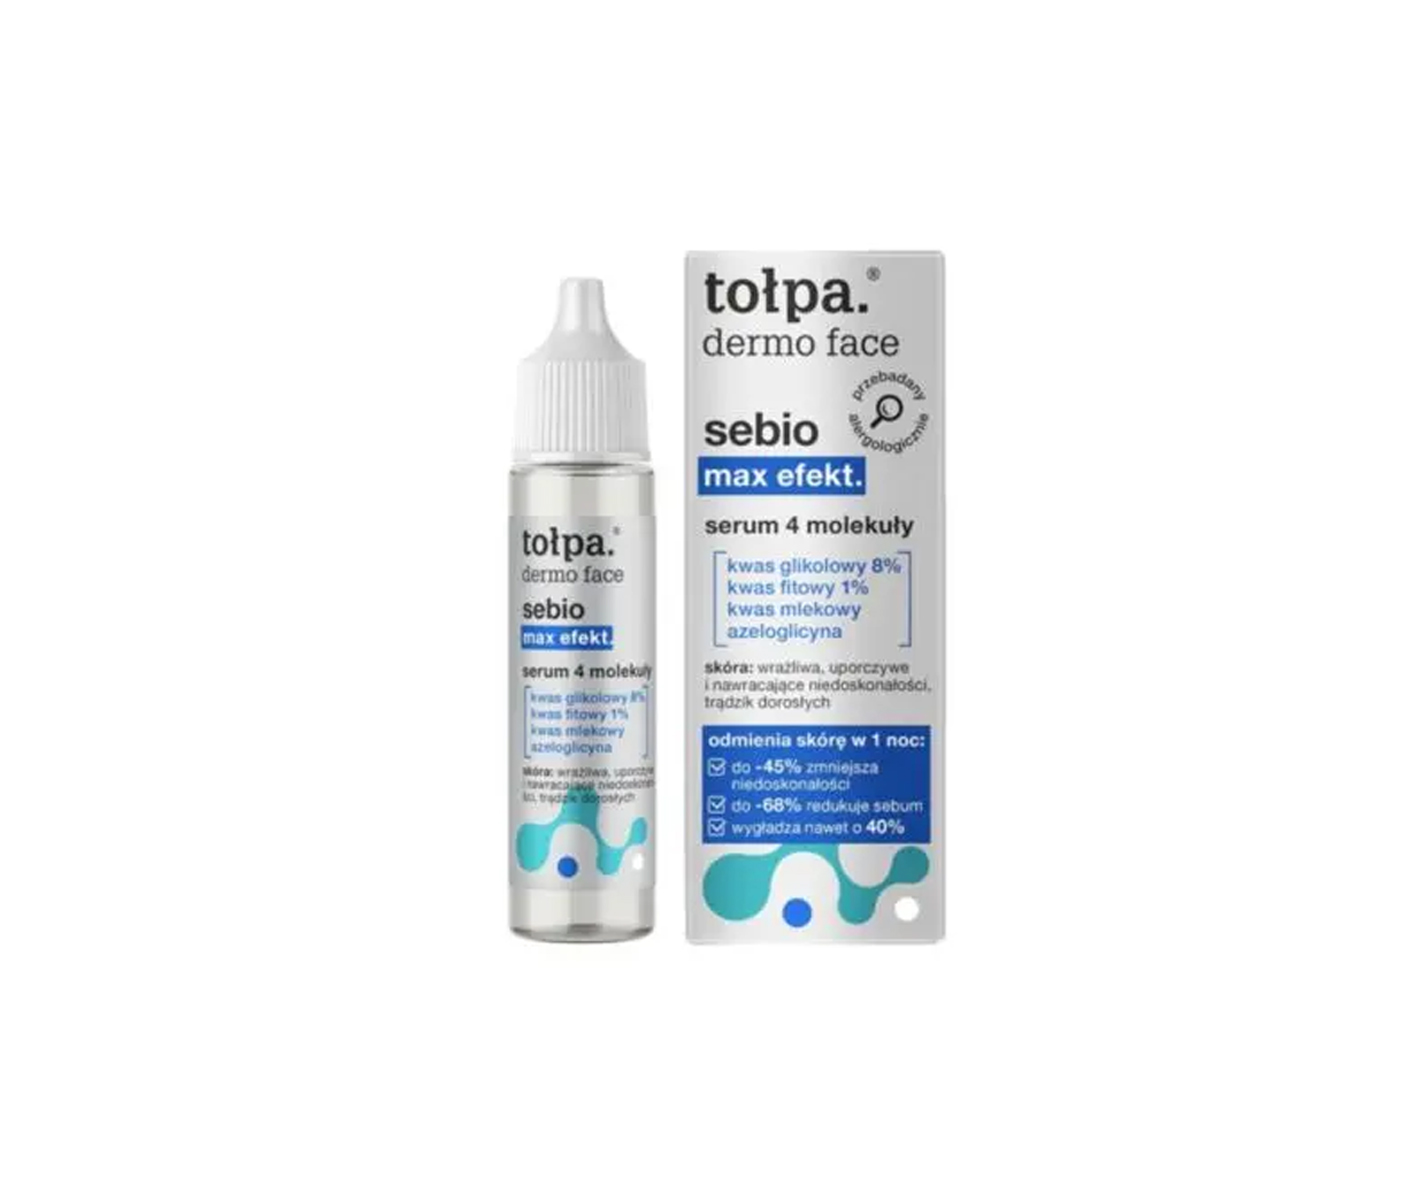  Tołpa, Dermo Face, Sebio max efekt, '4 molecules' serum, serum for acne-prone skin